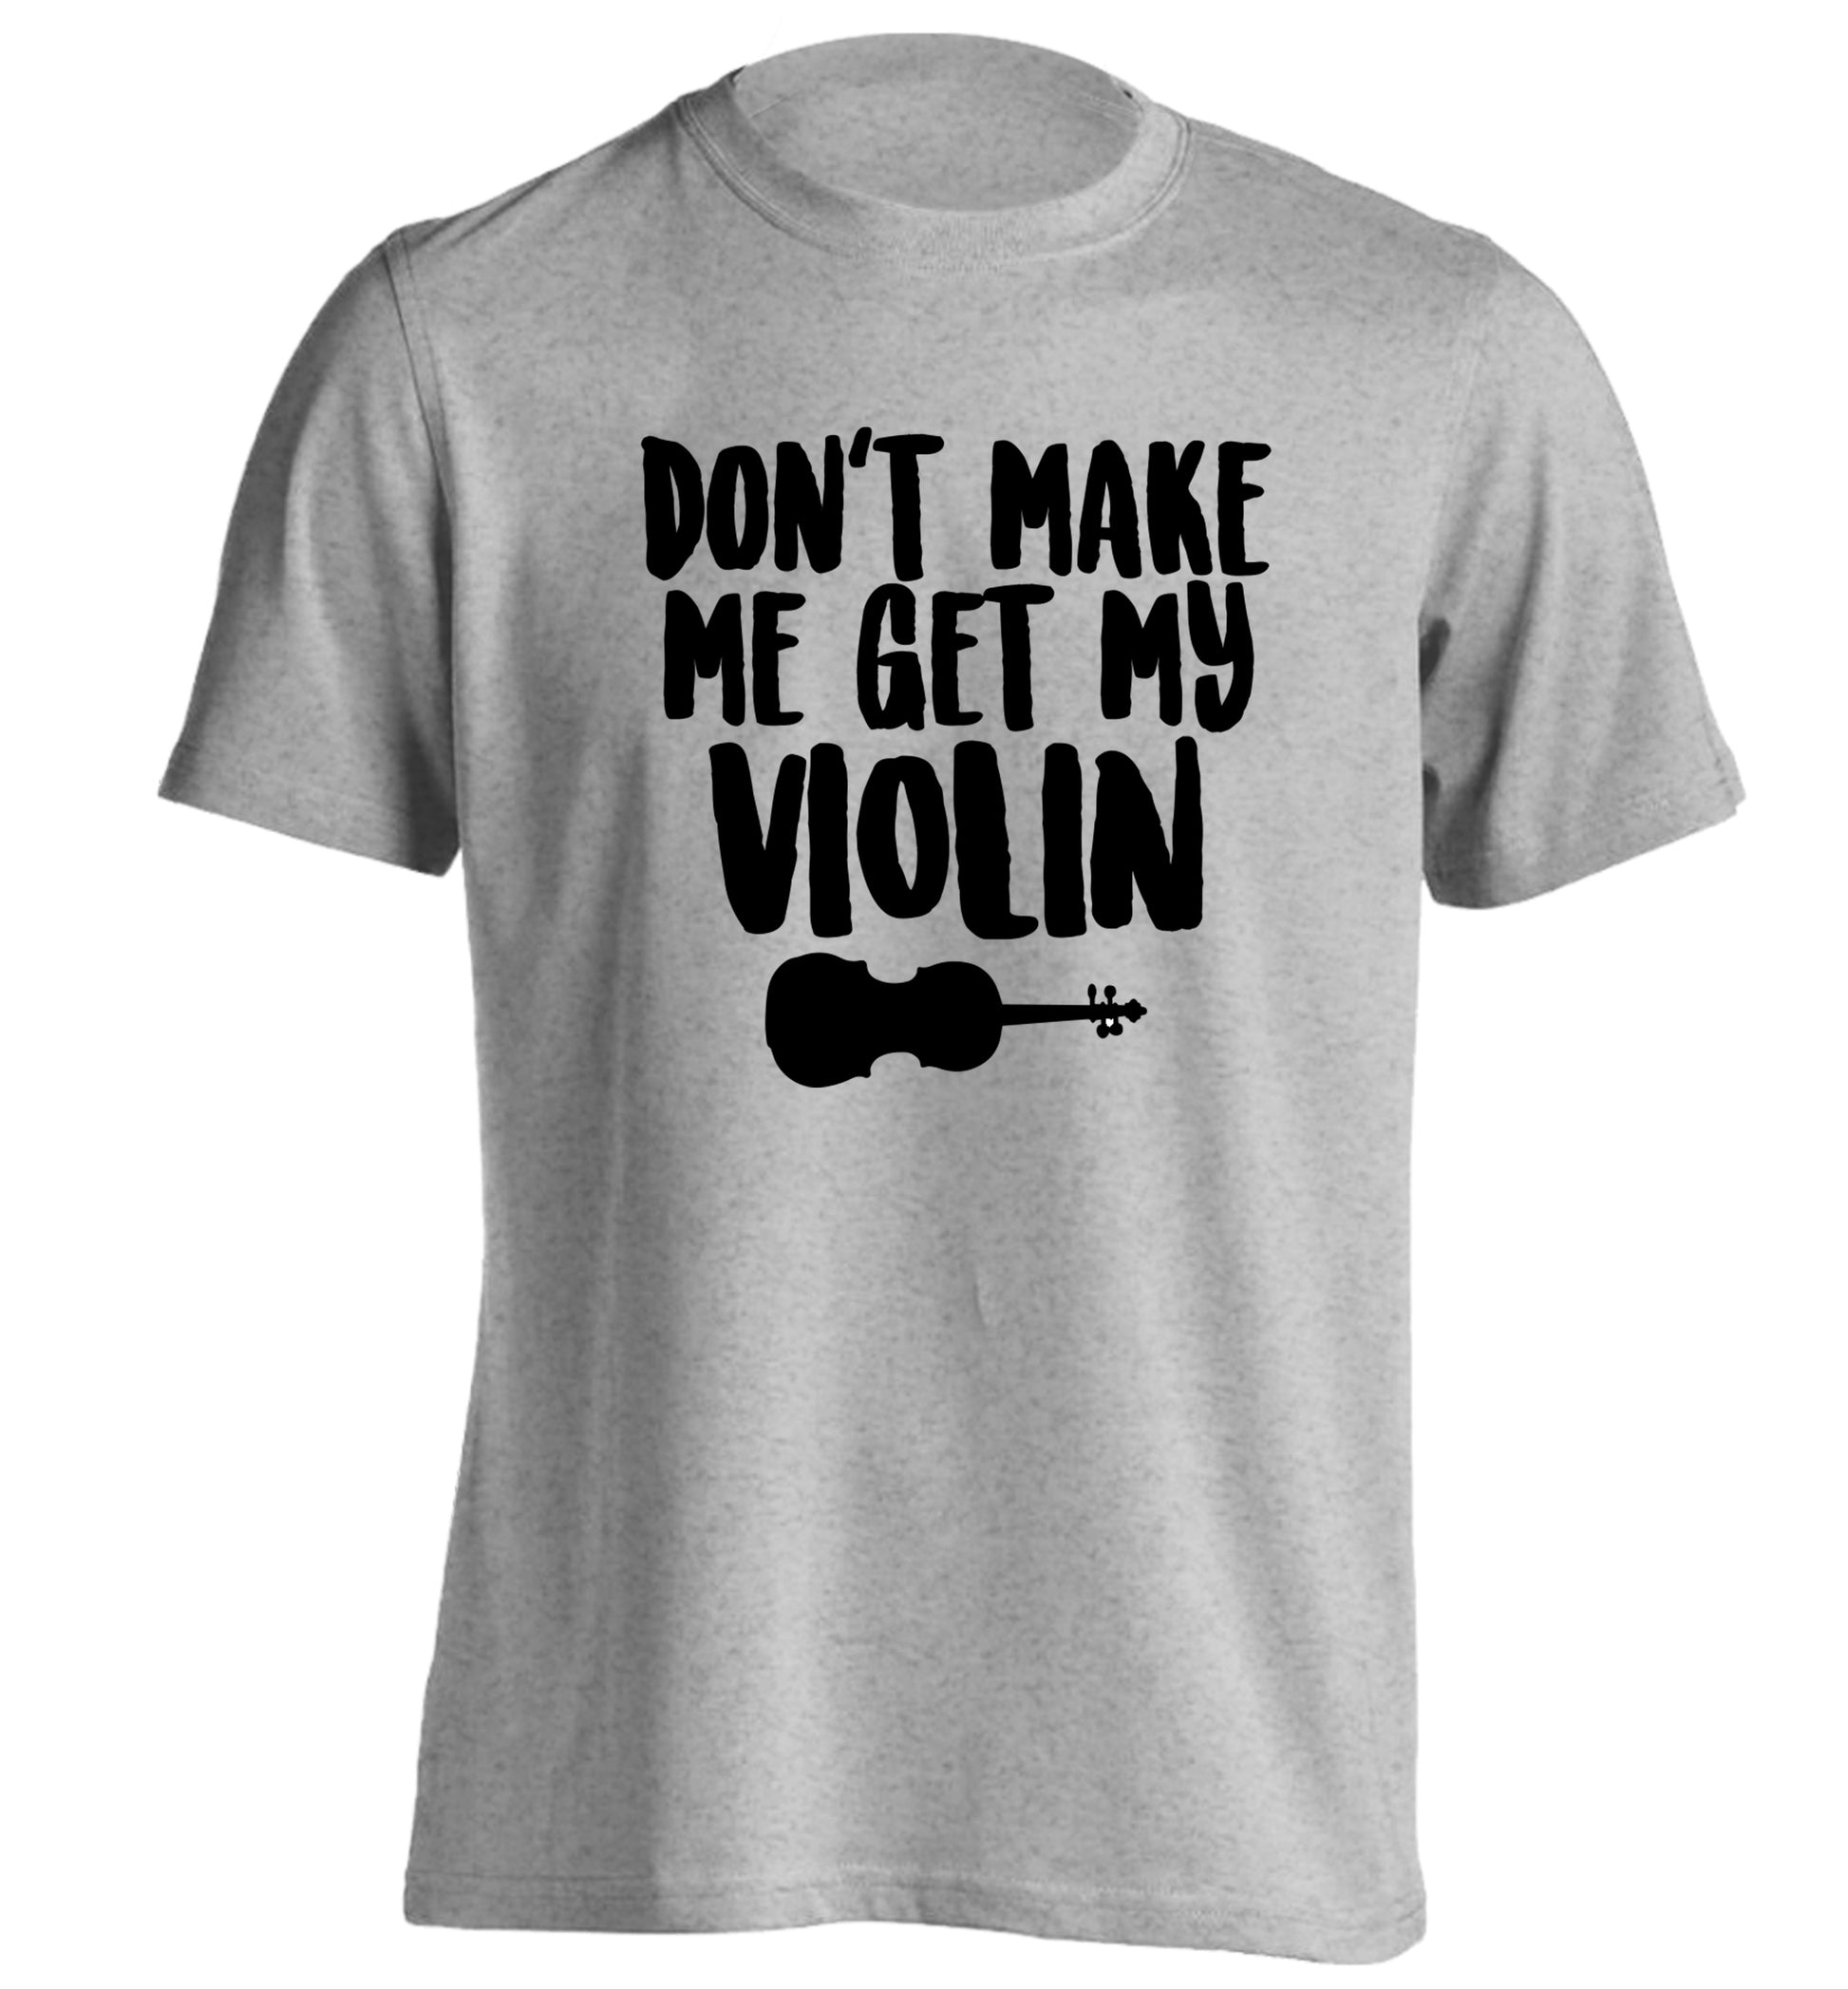 Don't make me get my violin adults unisex grey Tshirt 2XL